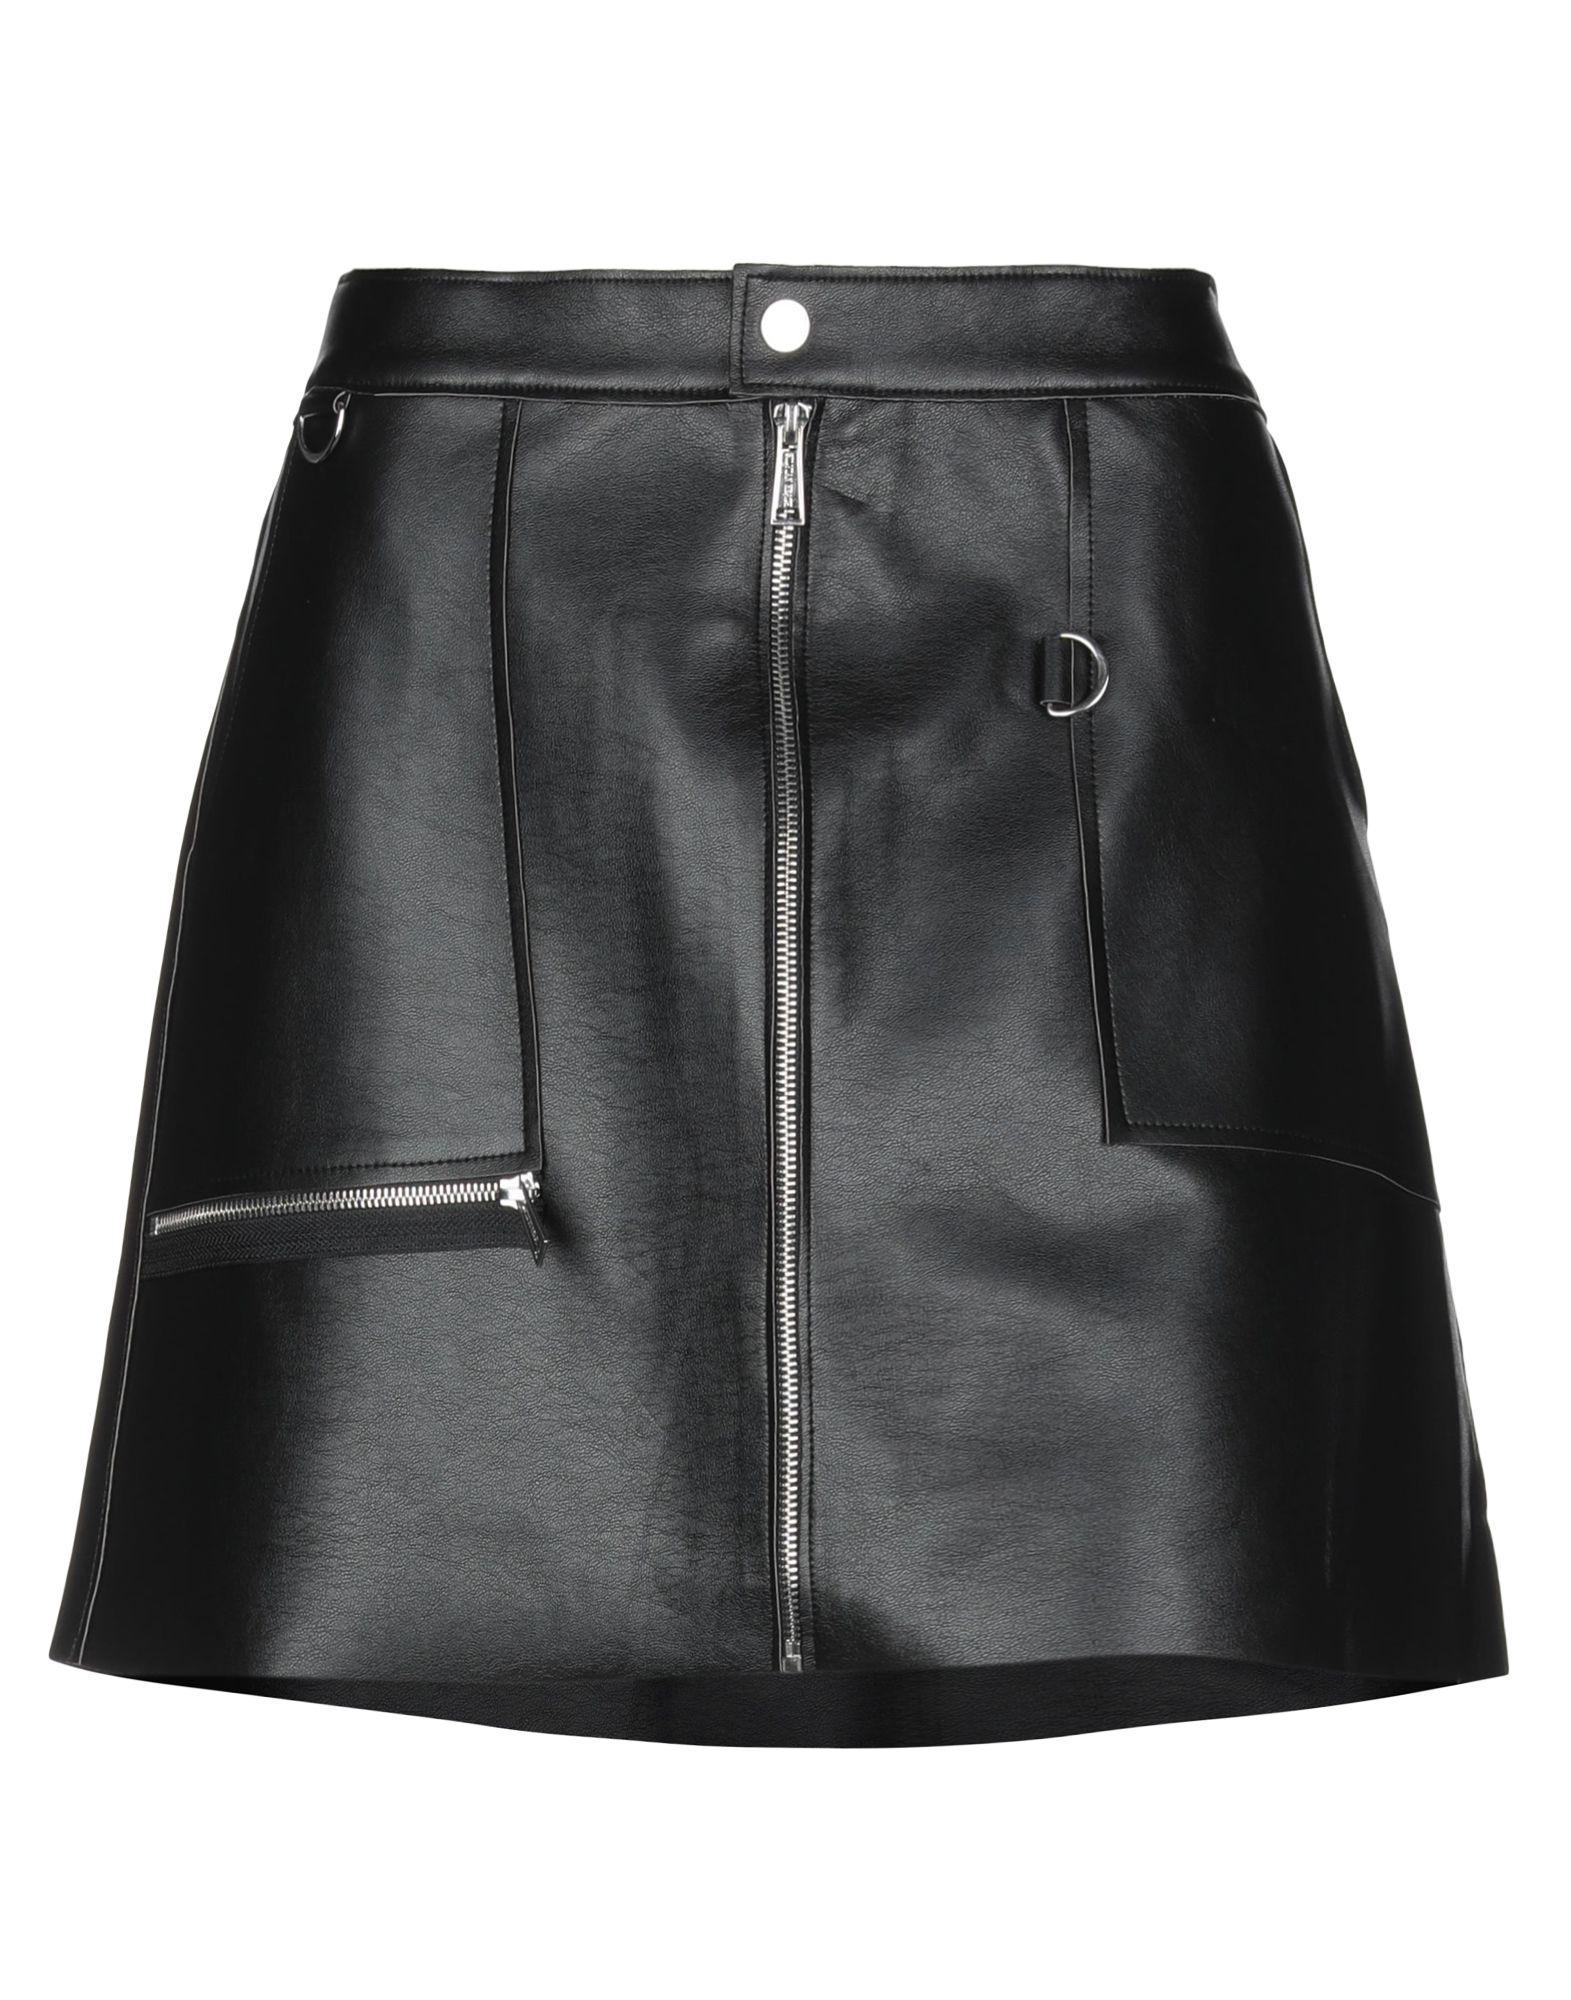 Silvian Heach Mini Skirt in Black - Lyst